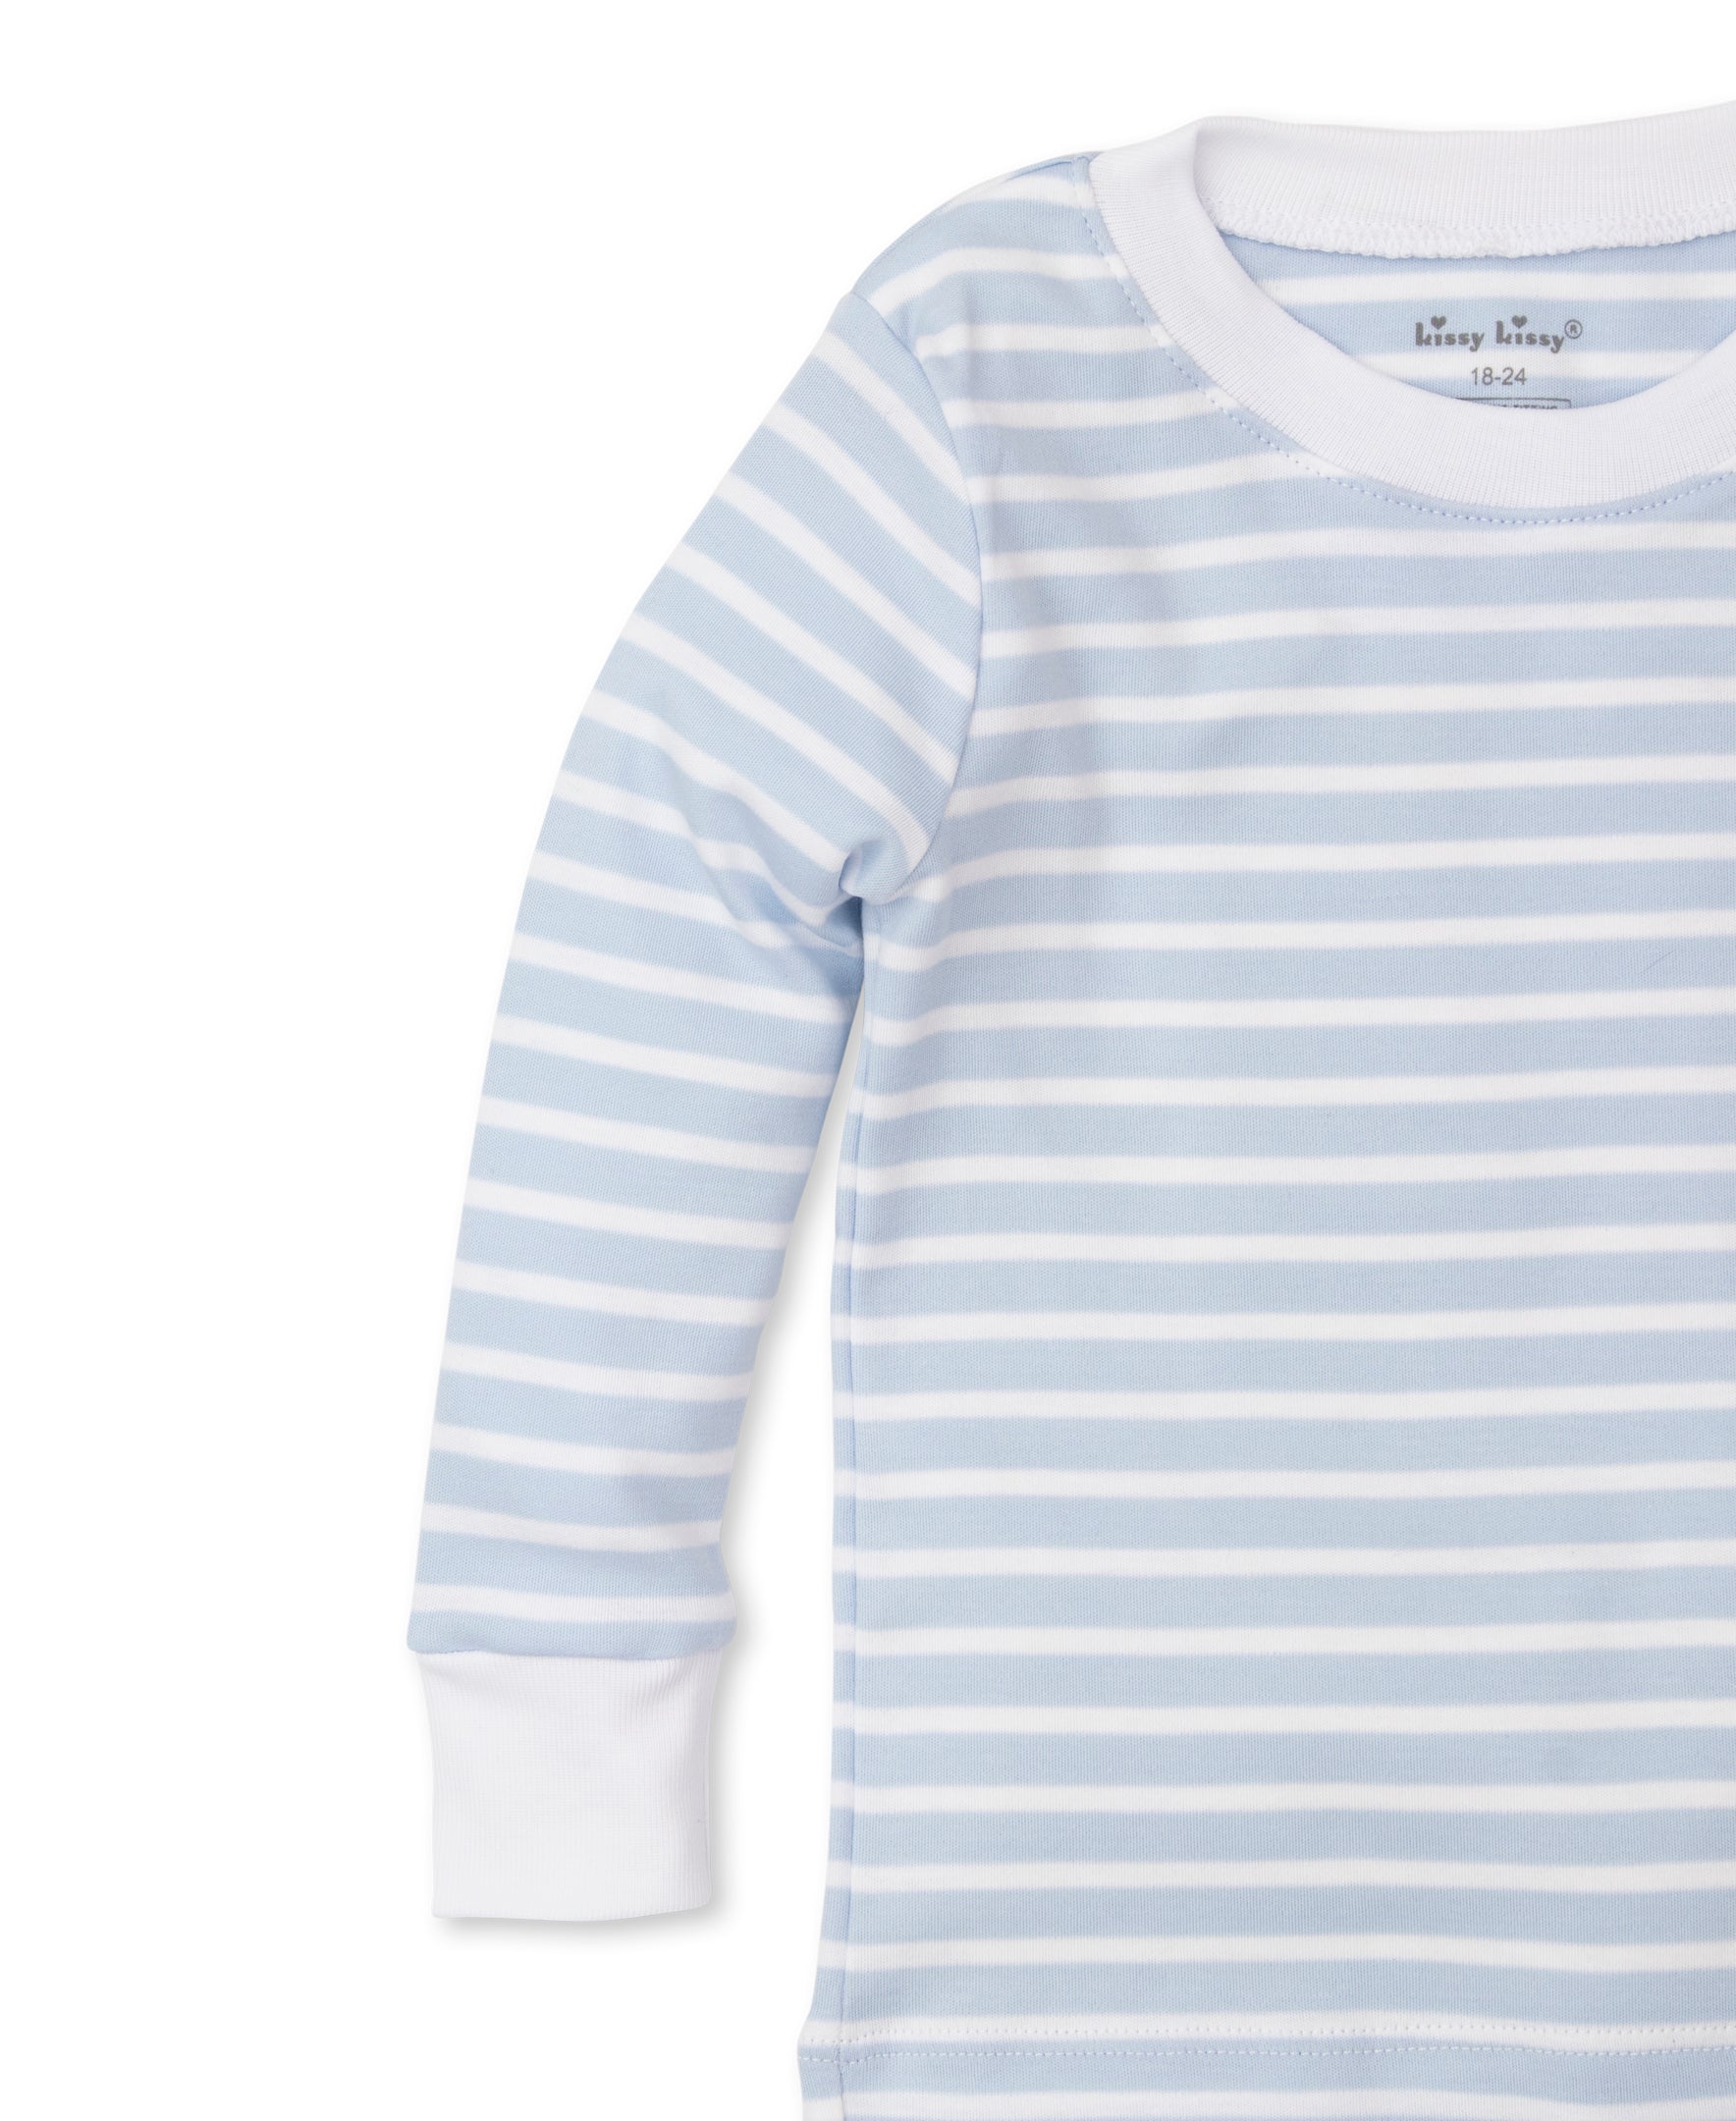 Team Stripes Blue Kids Pajama Set (8-10) - Kissy Kissy